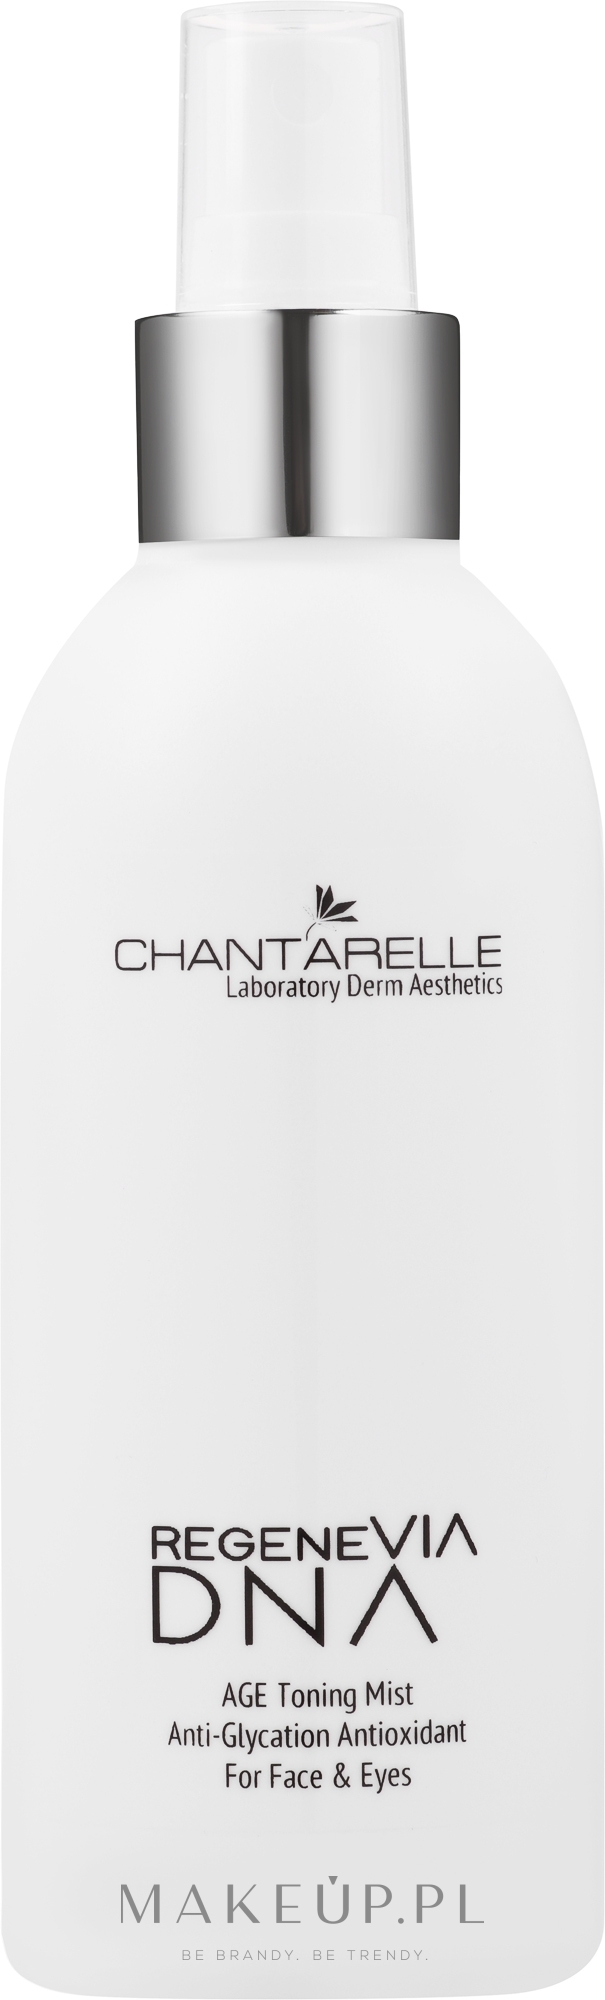 Spray do twarzy - Chantarelle A.G.E.Toning Mist Anti-Glication Antioxidant for Face & Eyes — Zdjęcie 200 ml